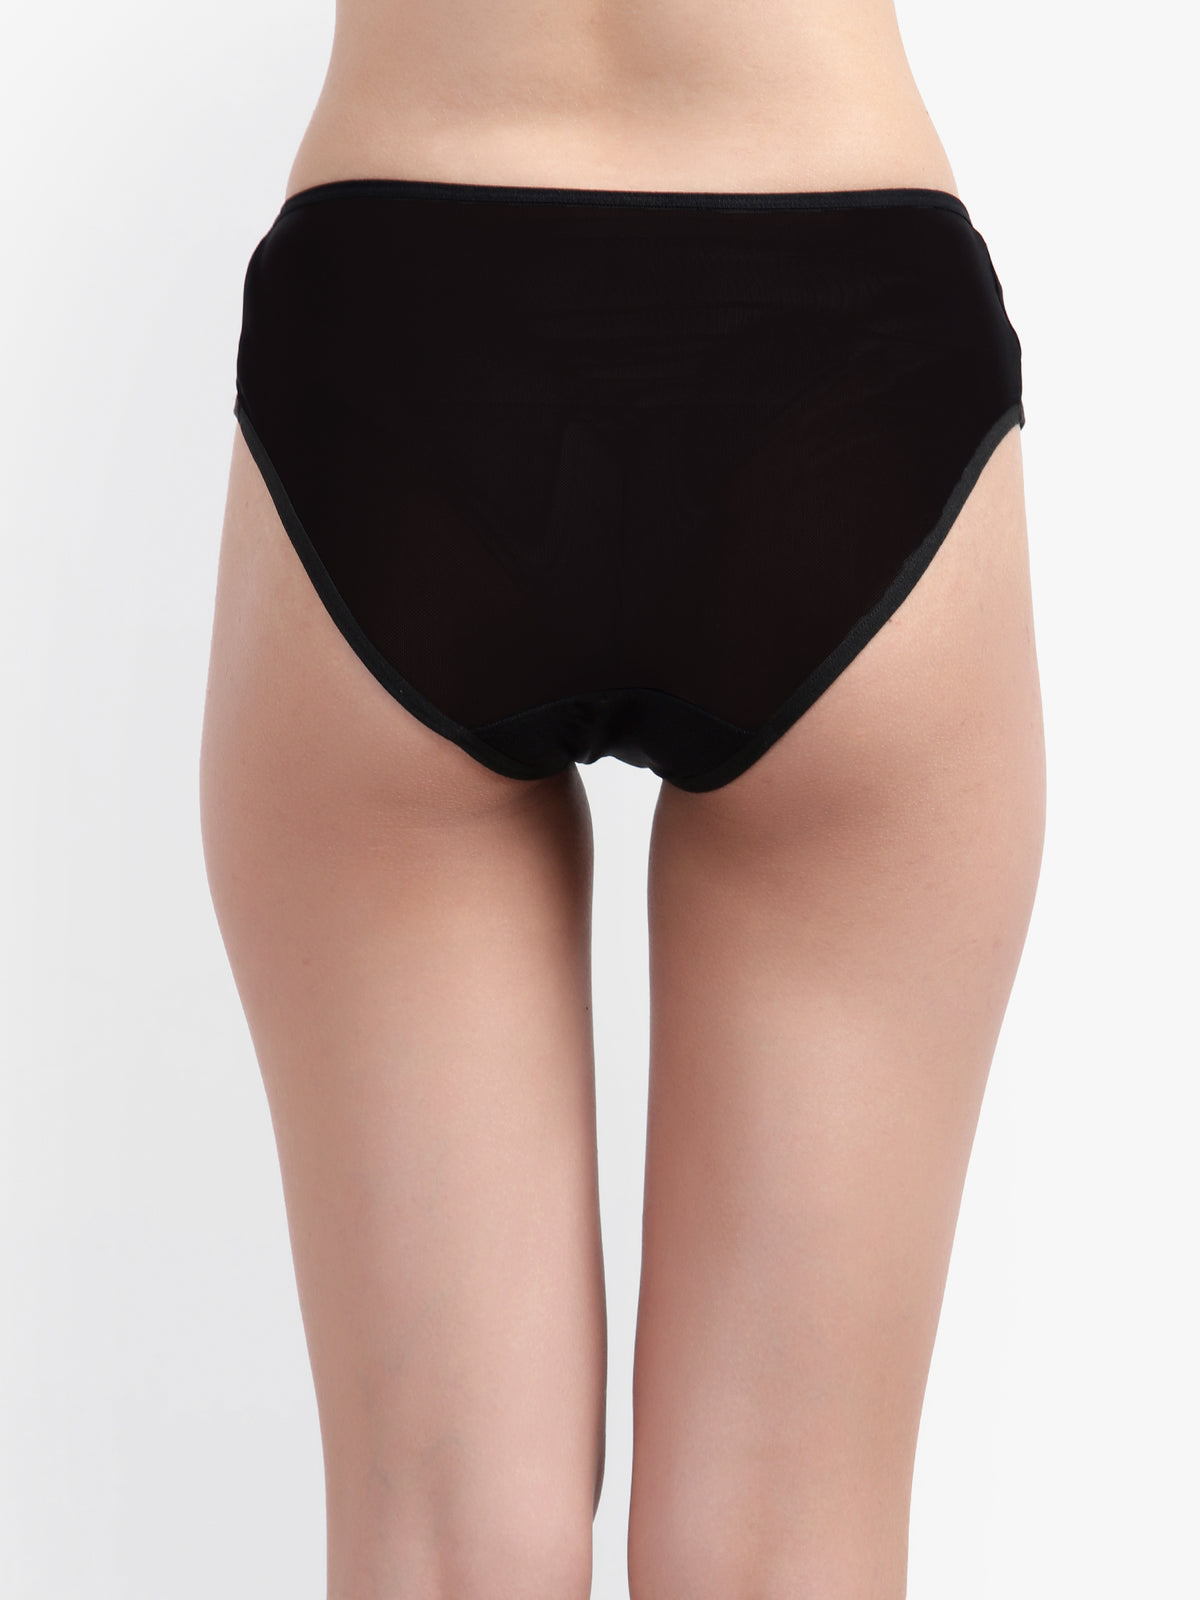 Women's Low Waist Sheer Mesh See-through Panties Girls' Trunks Briefs  Underwear